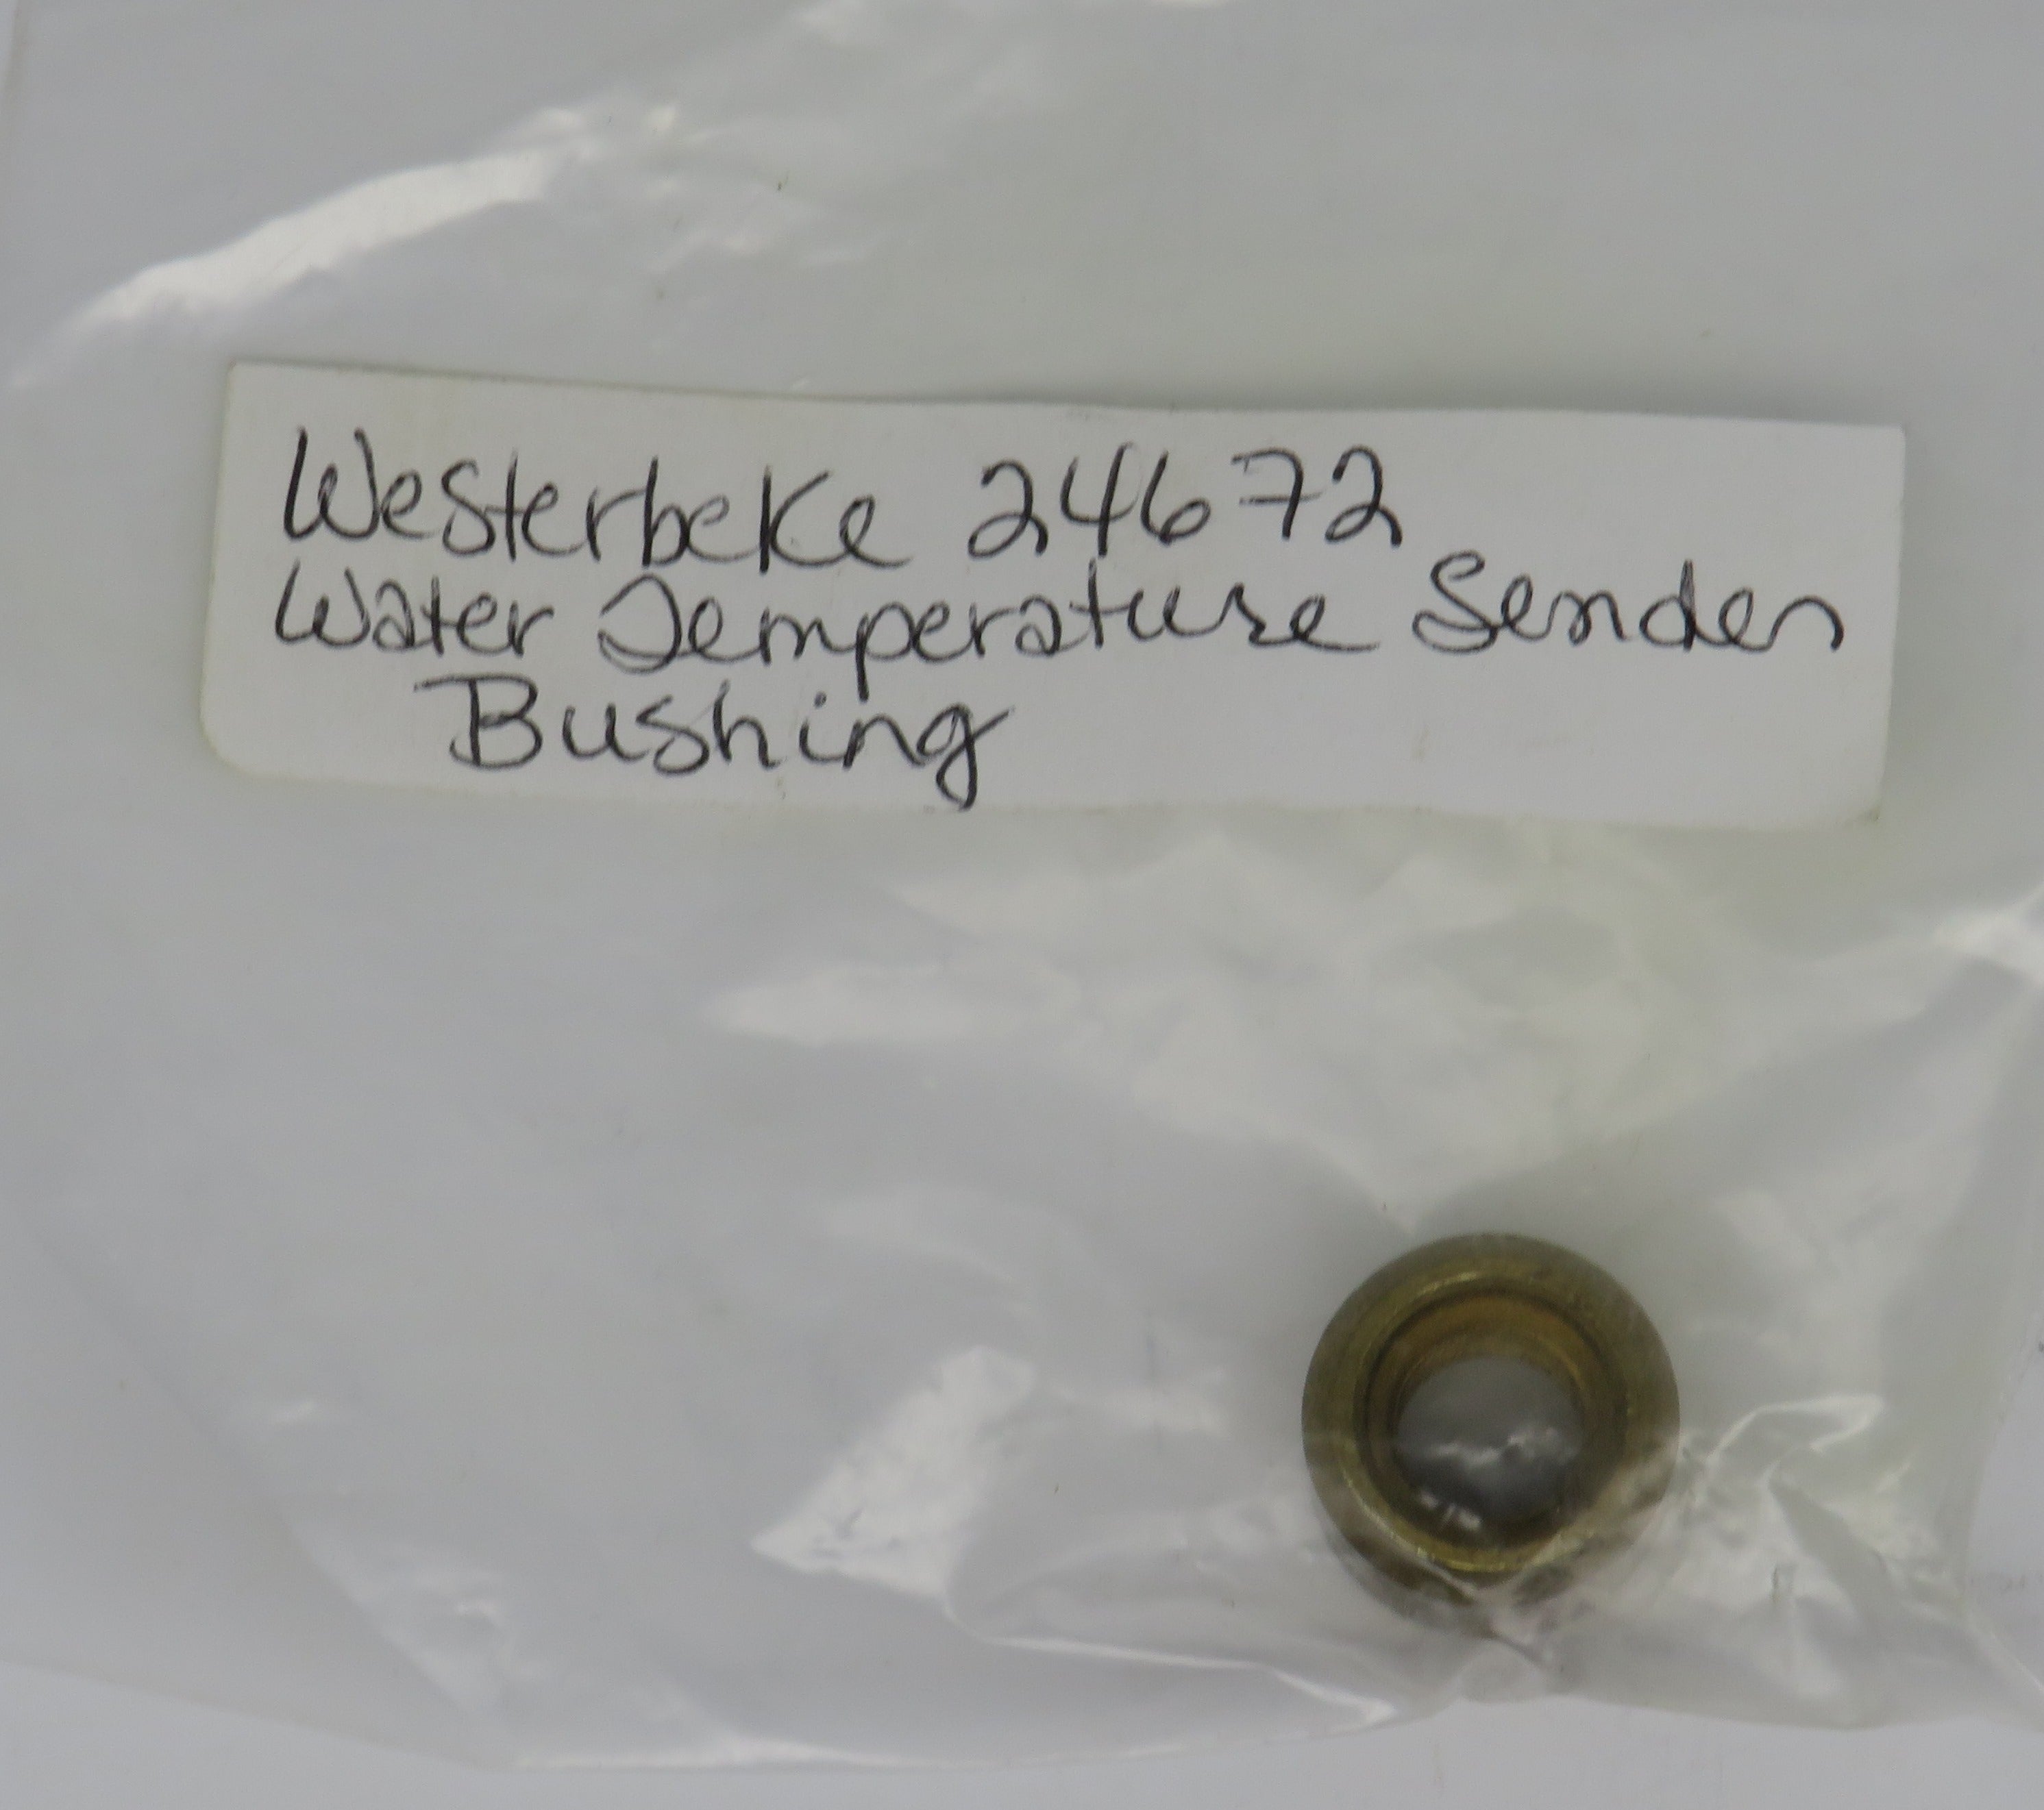 24672 Westerbeke Bushing, Water Temperature Sender